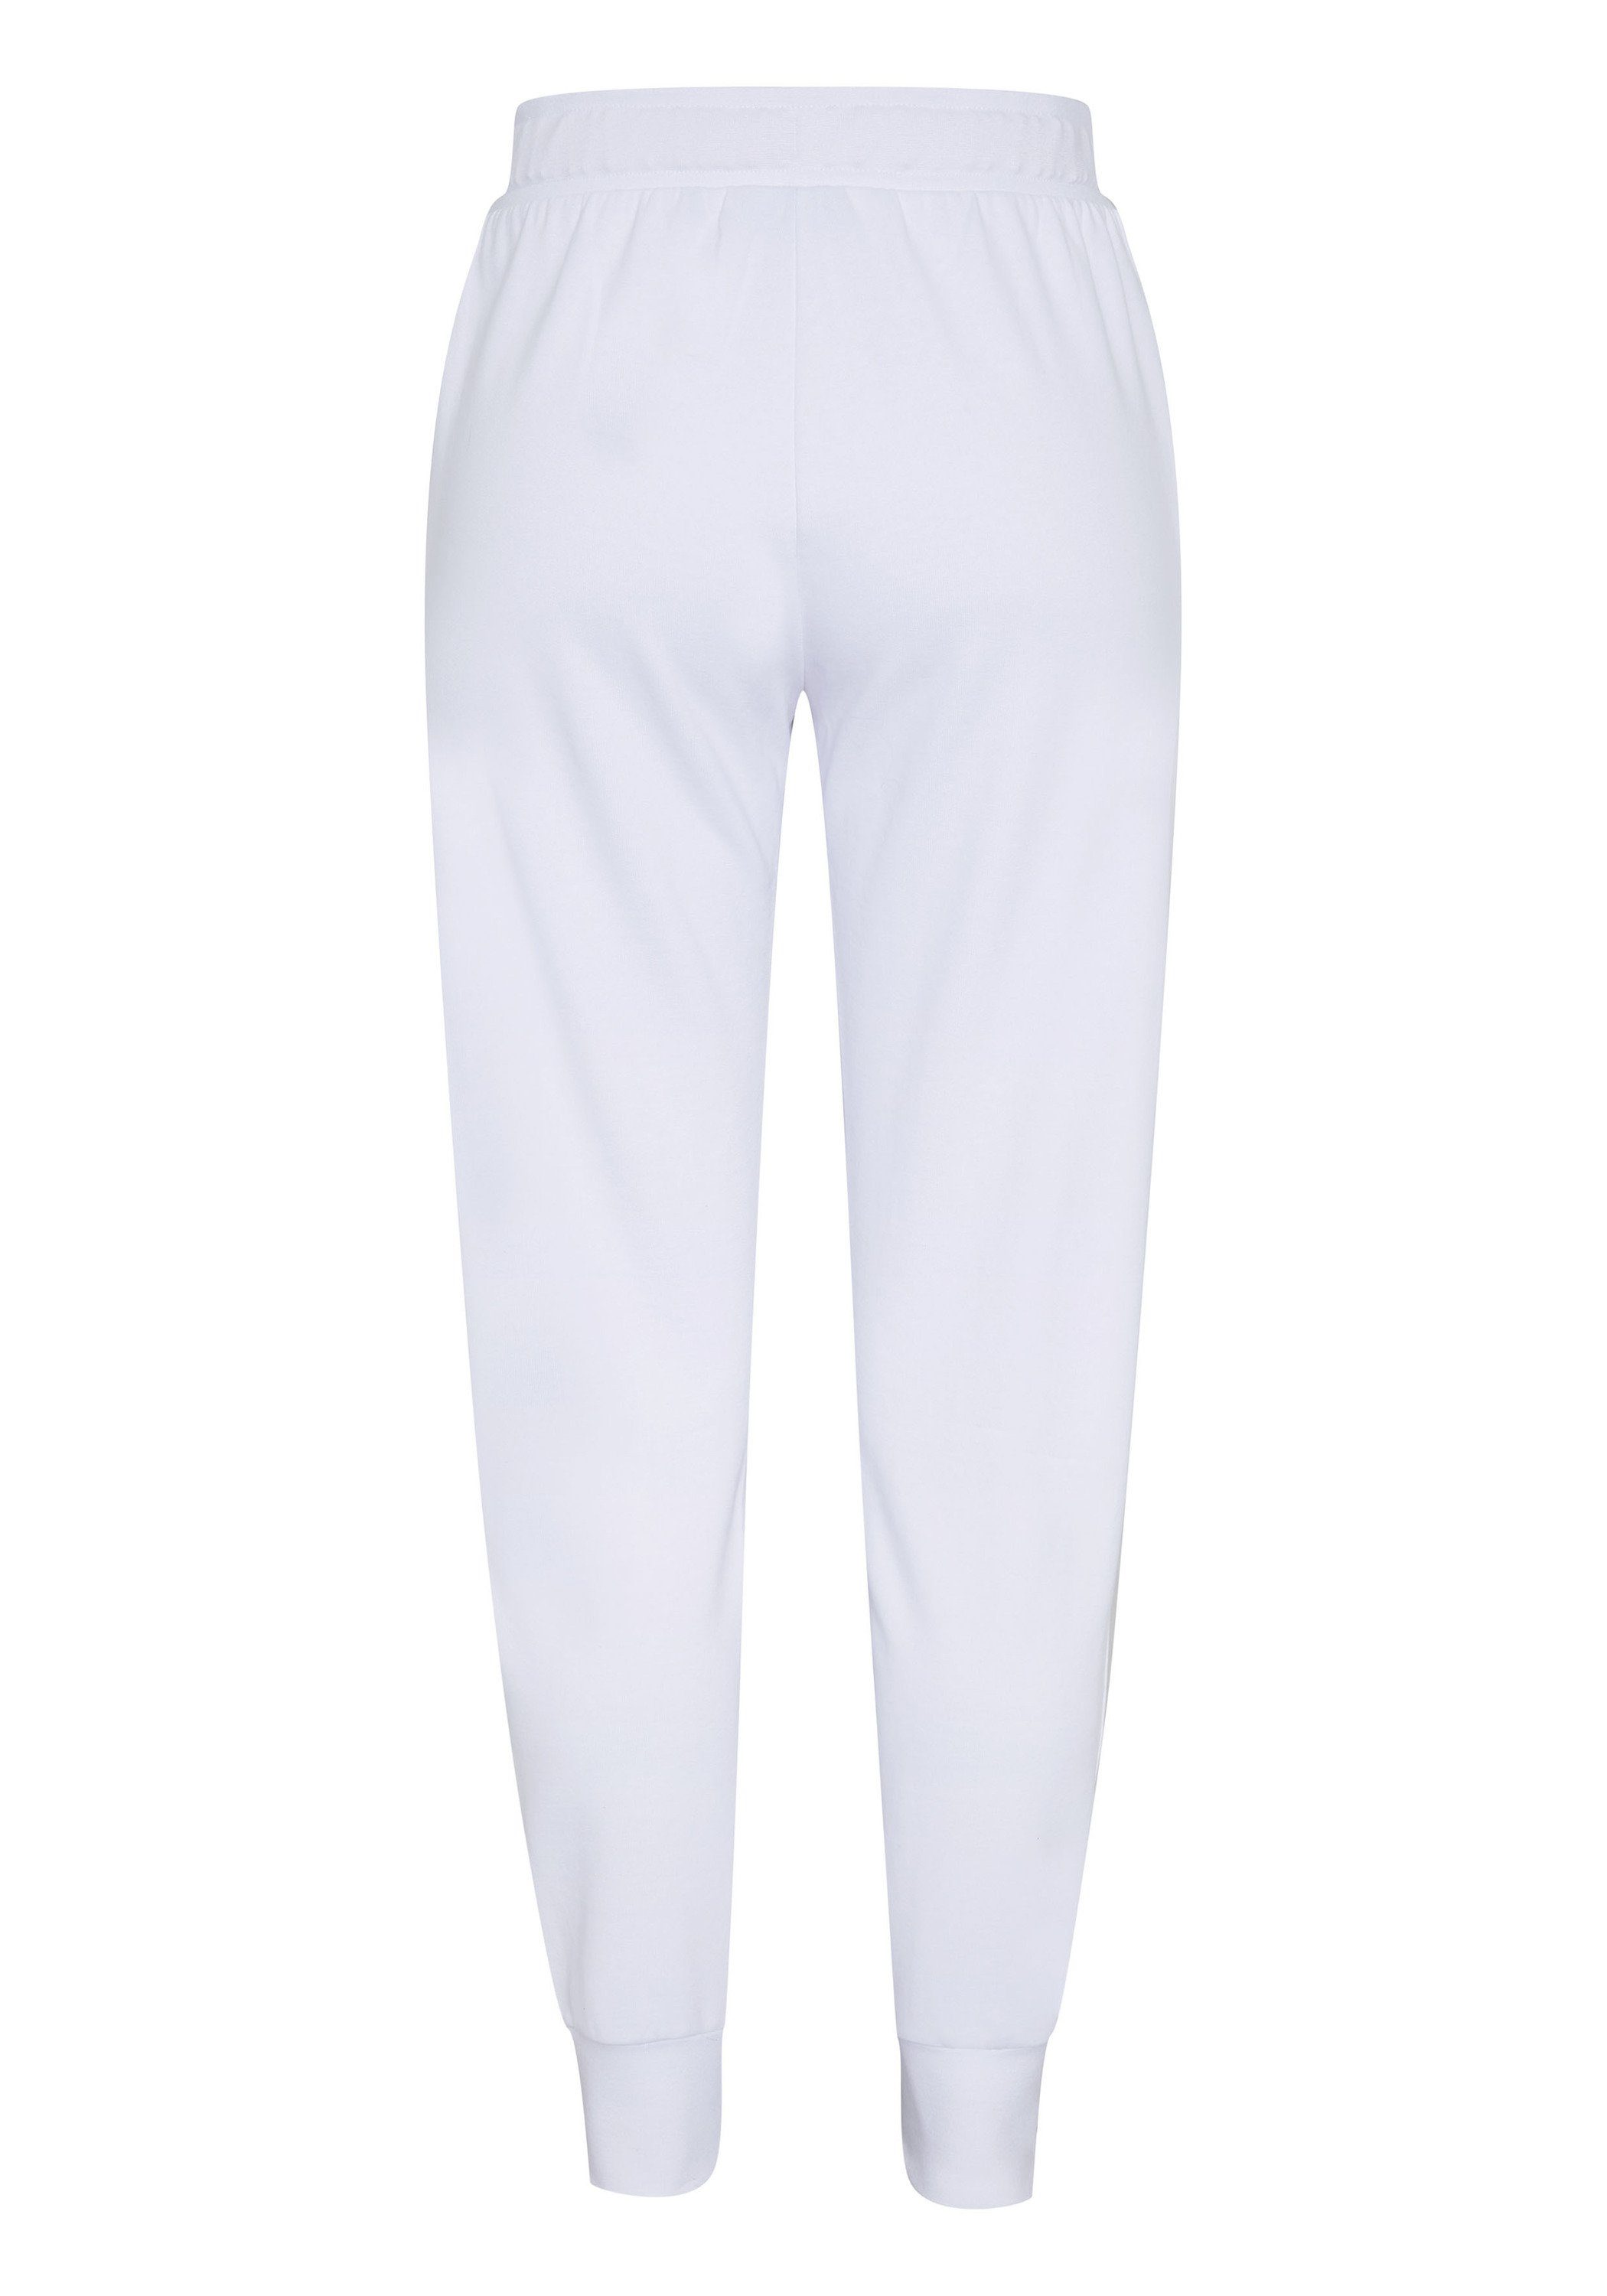 Oklahoma Jeans Sweathose 11-0601 Slim Bright Fit White in